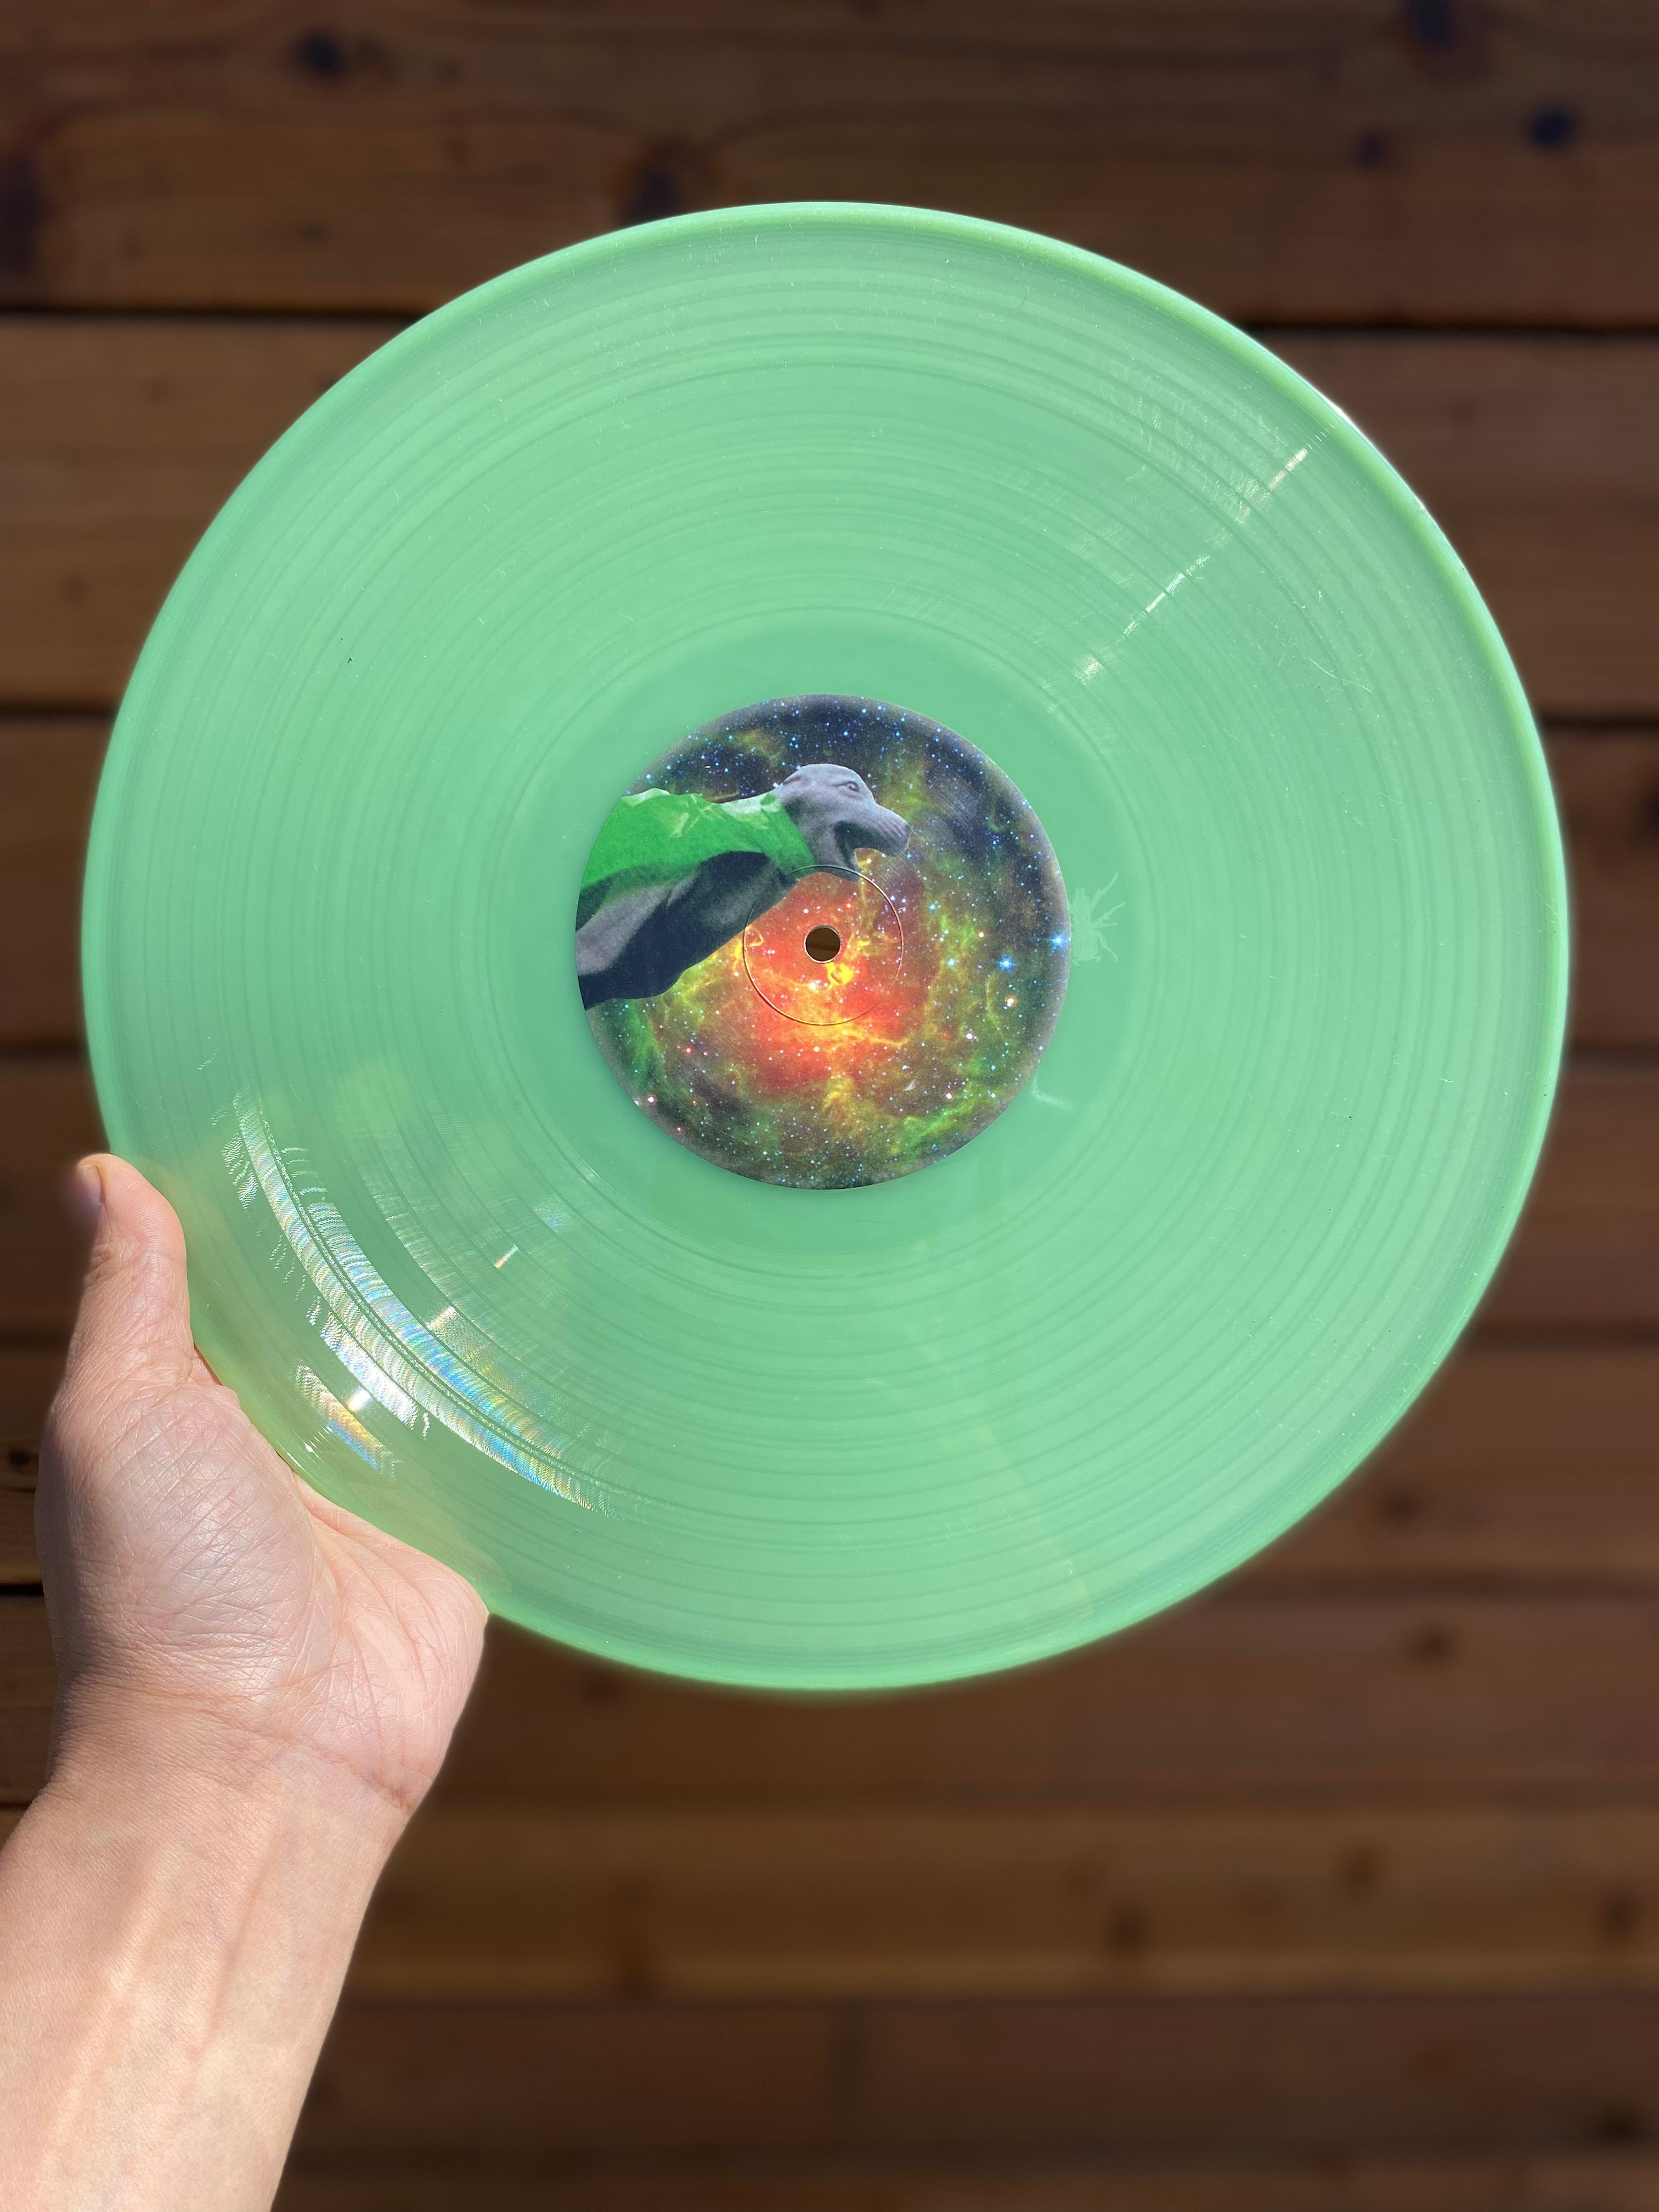 Inverted Superseal Misprint🔥12” Glow in the Dark Vinyl!!